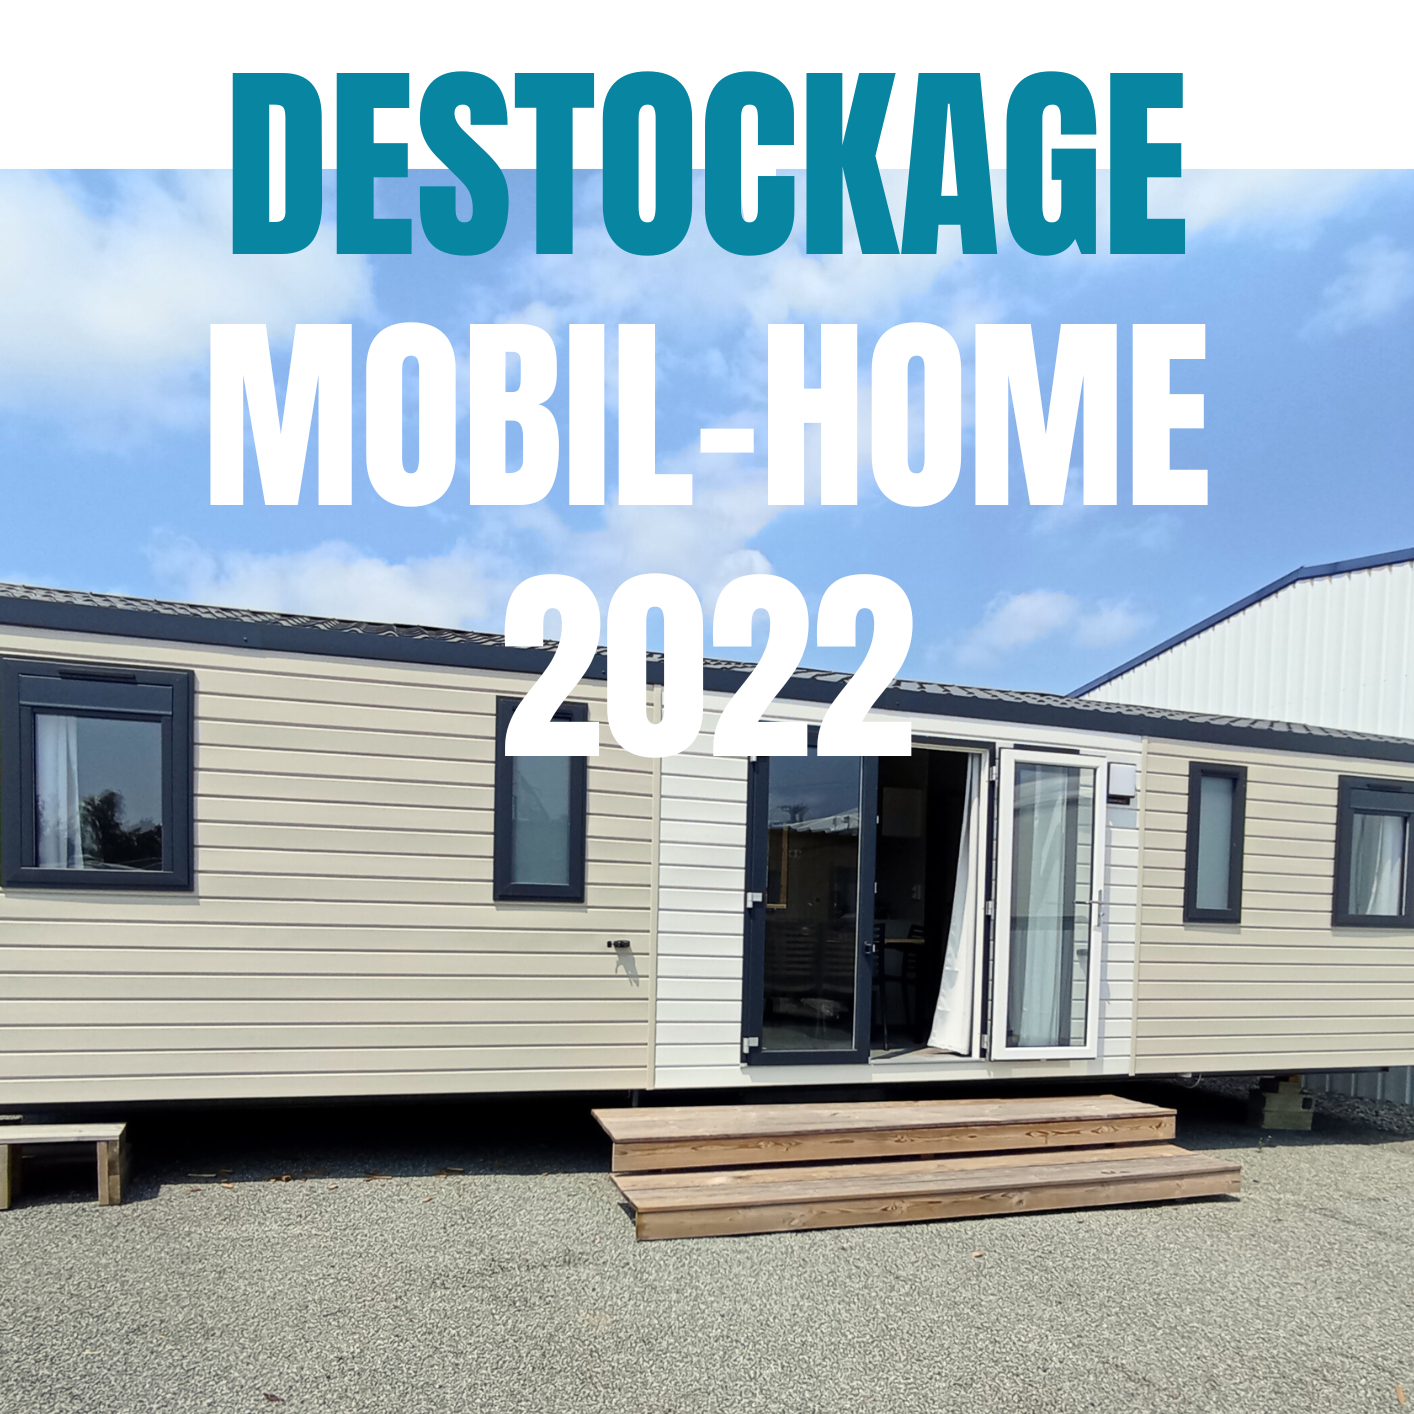 Destockage mobil-home